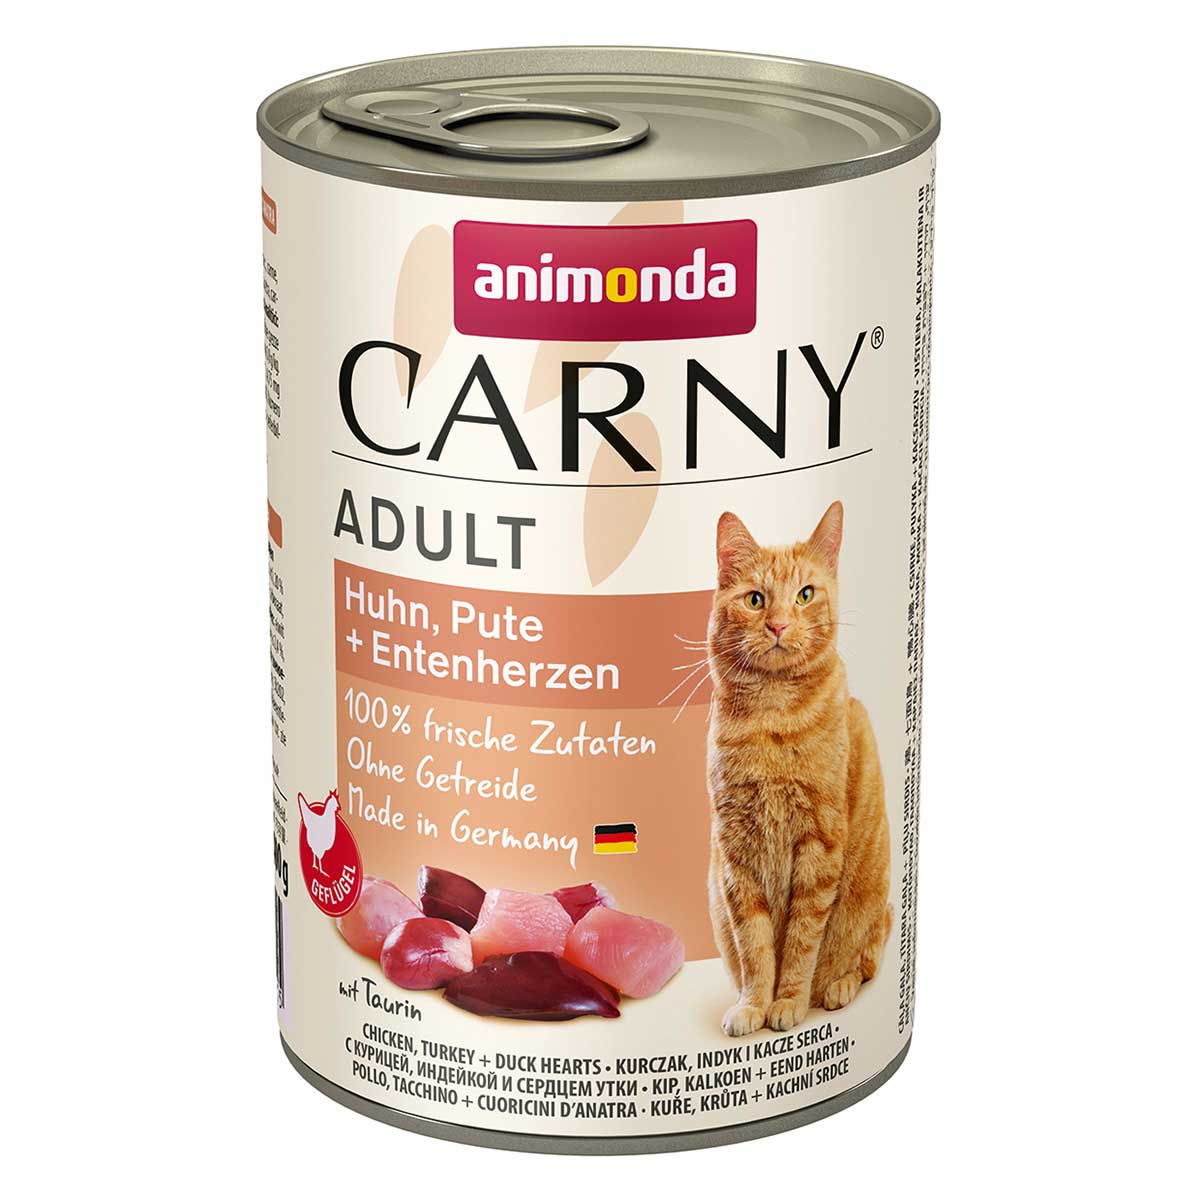 animonda Carny Adult Huhn, Pute und Entenherz 24x400g von animonda Carny